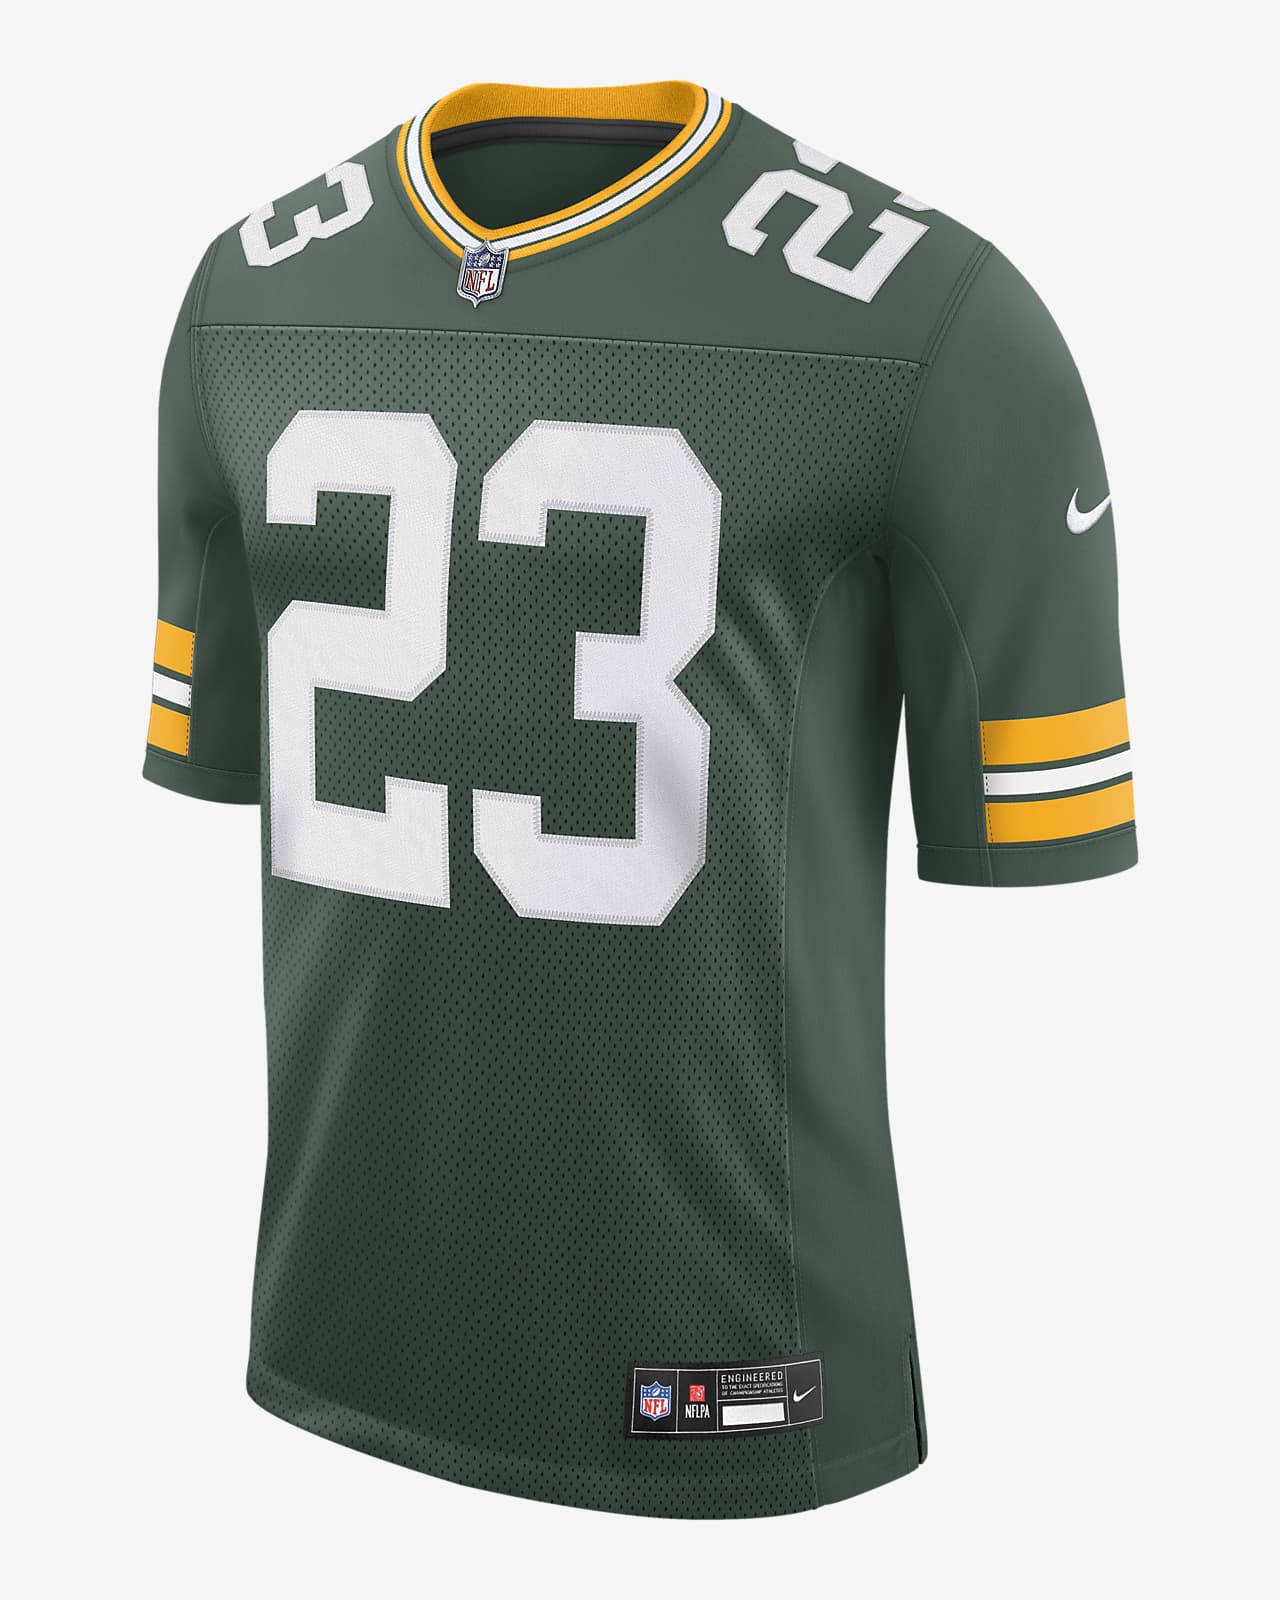 Jersey Nike Dri-FIT de la NFL Limited para hombre Jaire Alexander Green Bay Packers